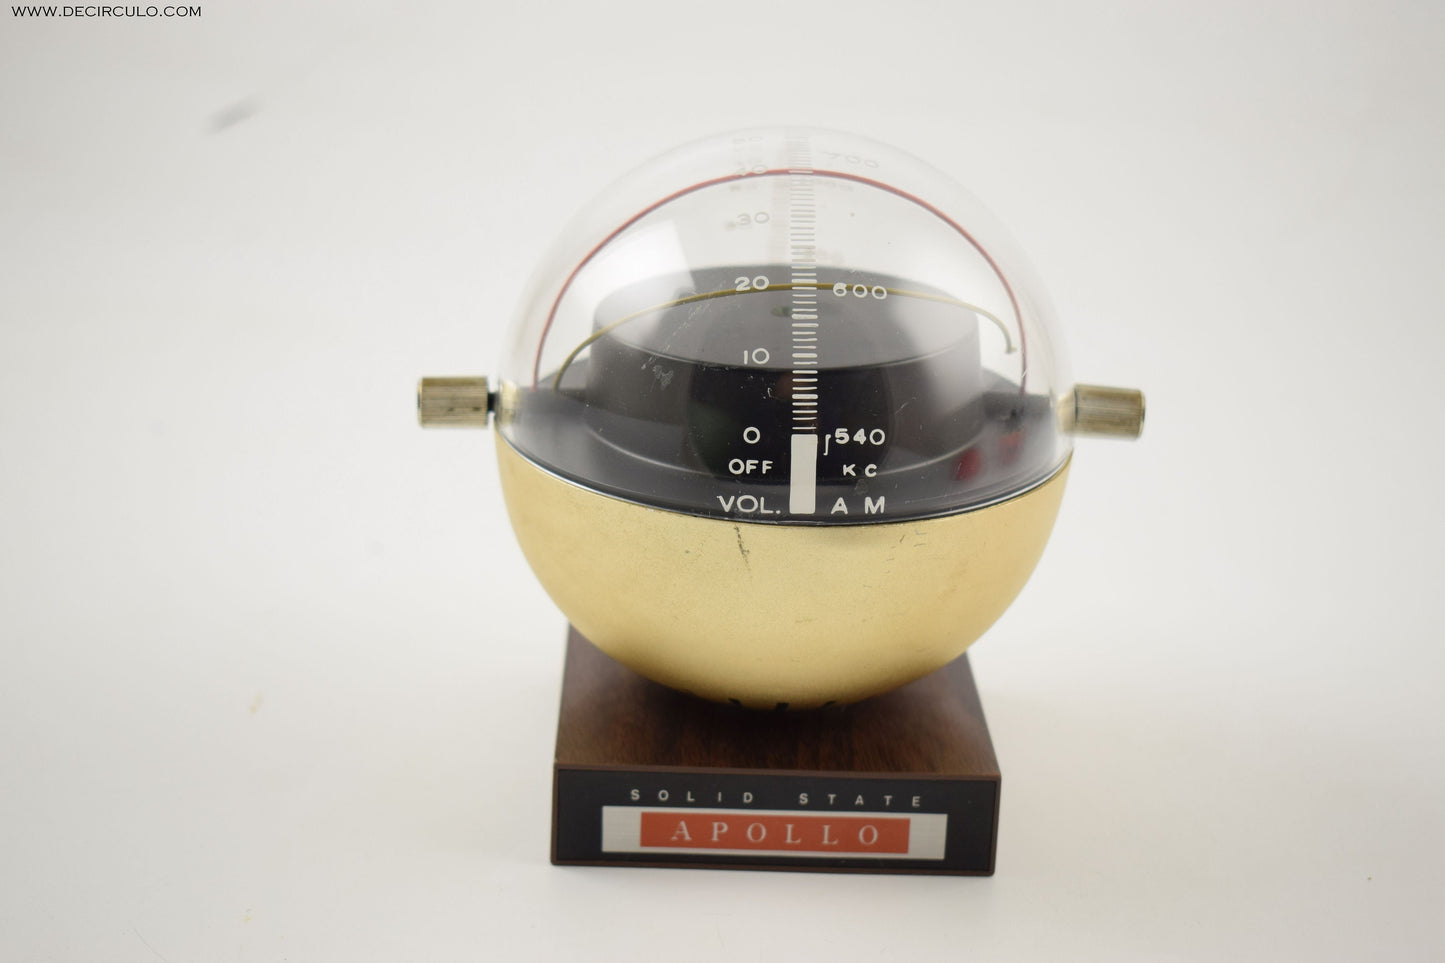 Estado sólido: radio de diseño de la era espacial Apolo Panasonic, Matsushita, National